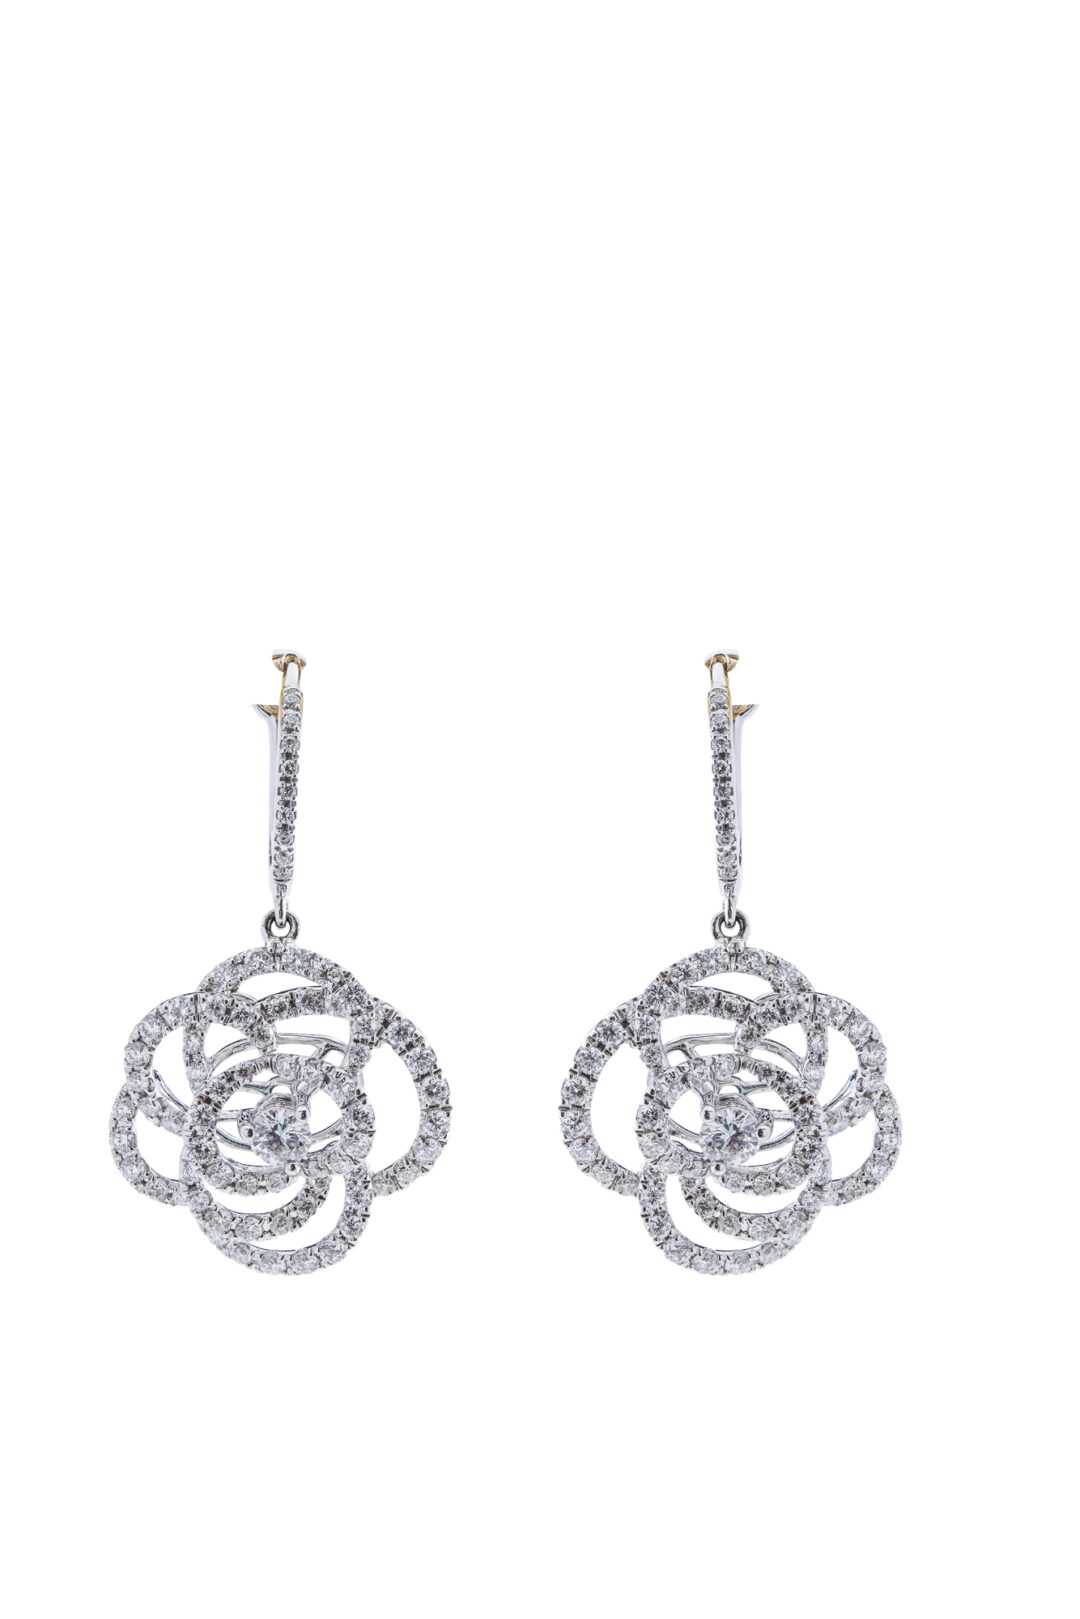 18k White Gold Vera Wang Inspired Diamond Flower Drop Earrings Jewels in paradise Aruba